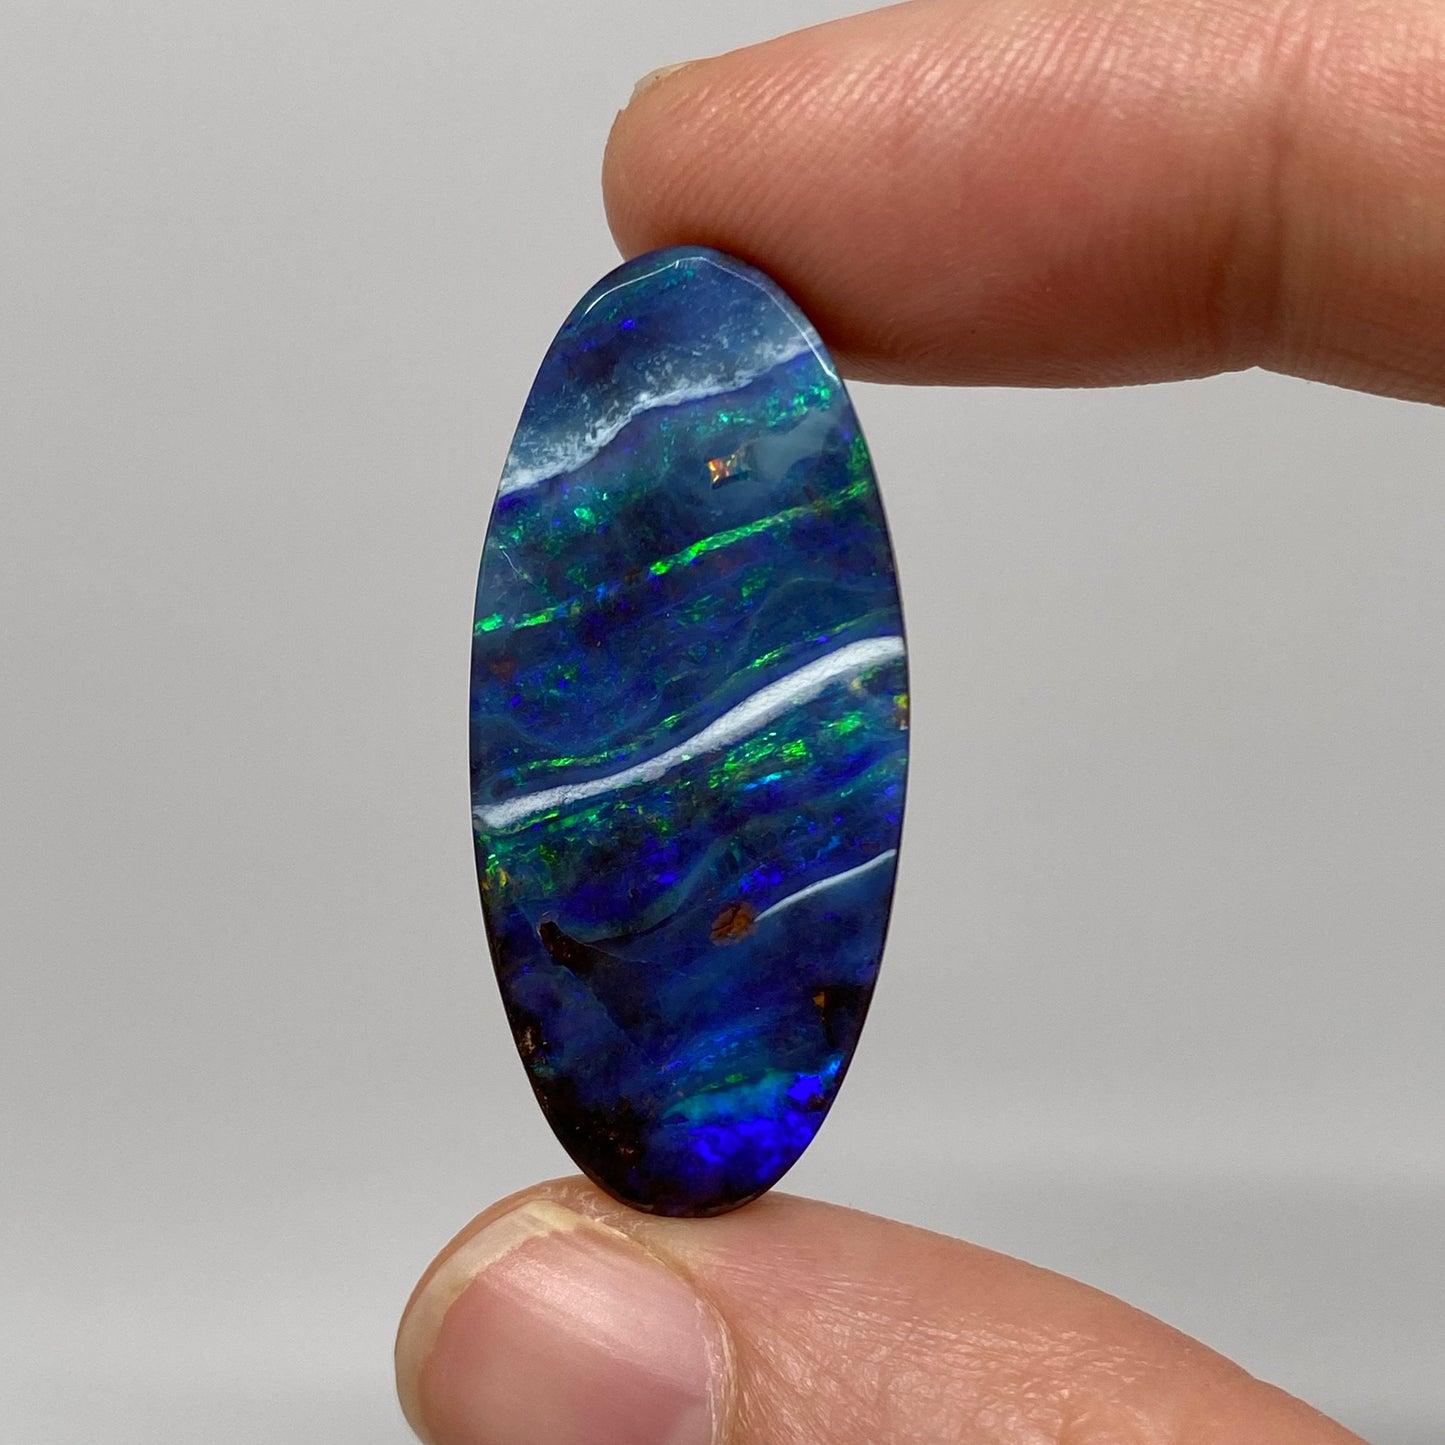 25.78 Ct long oval boulder opal